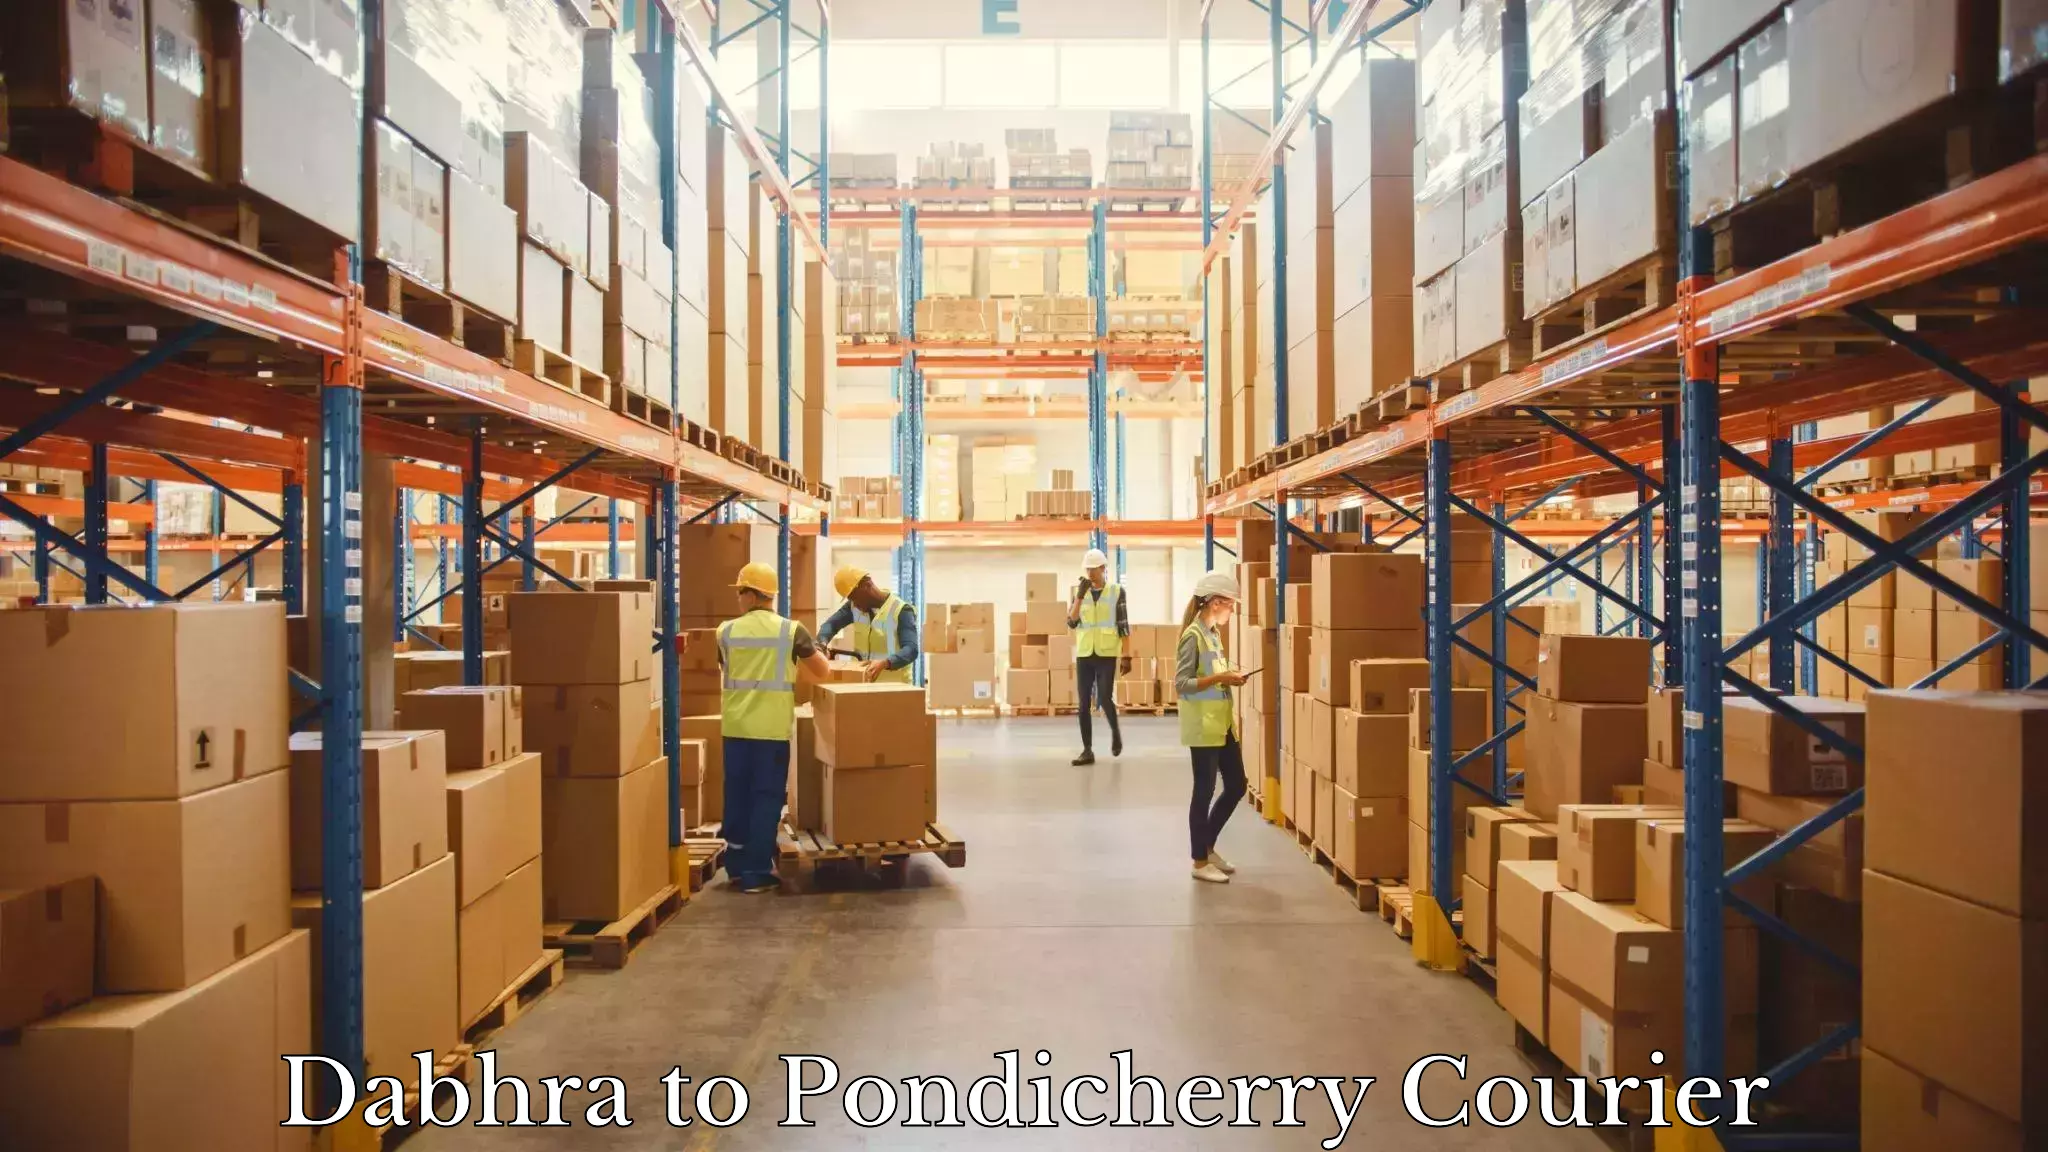 Courier service comparison Dabhra to Pondicherry University